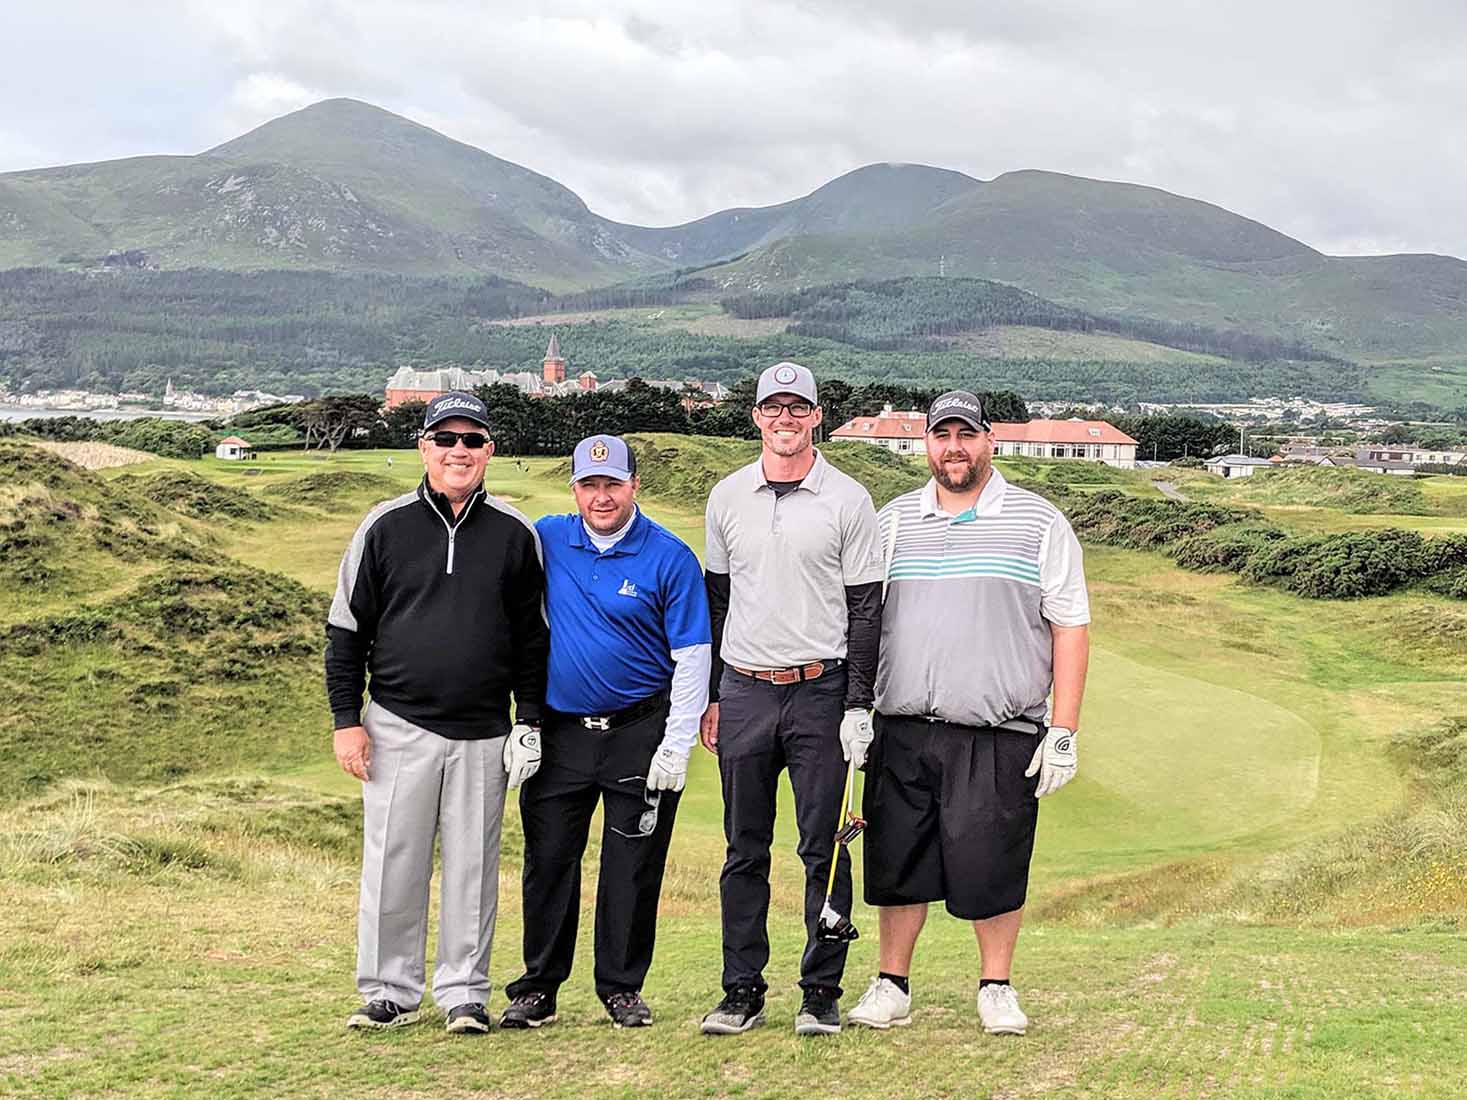 Haversham & Baker Ireland golf tour reviews